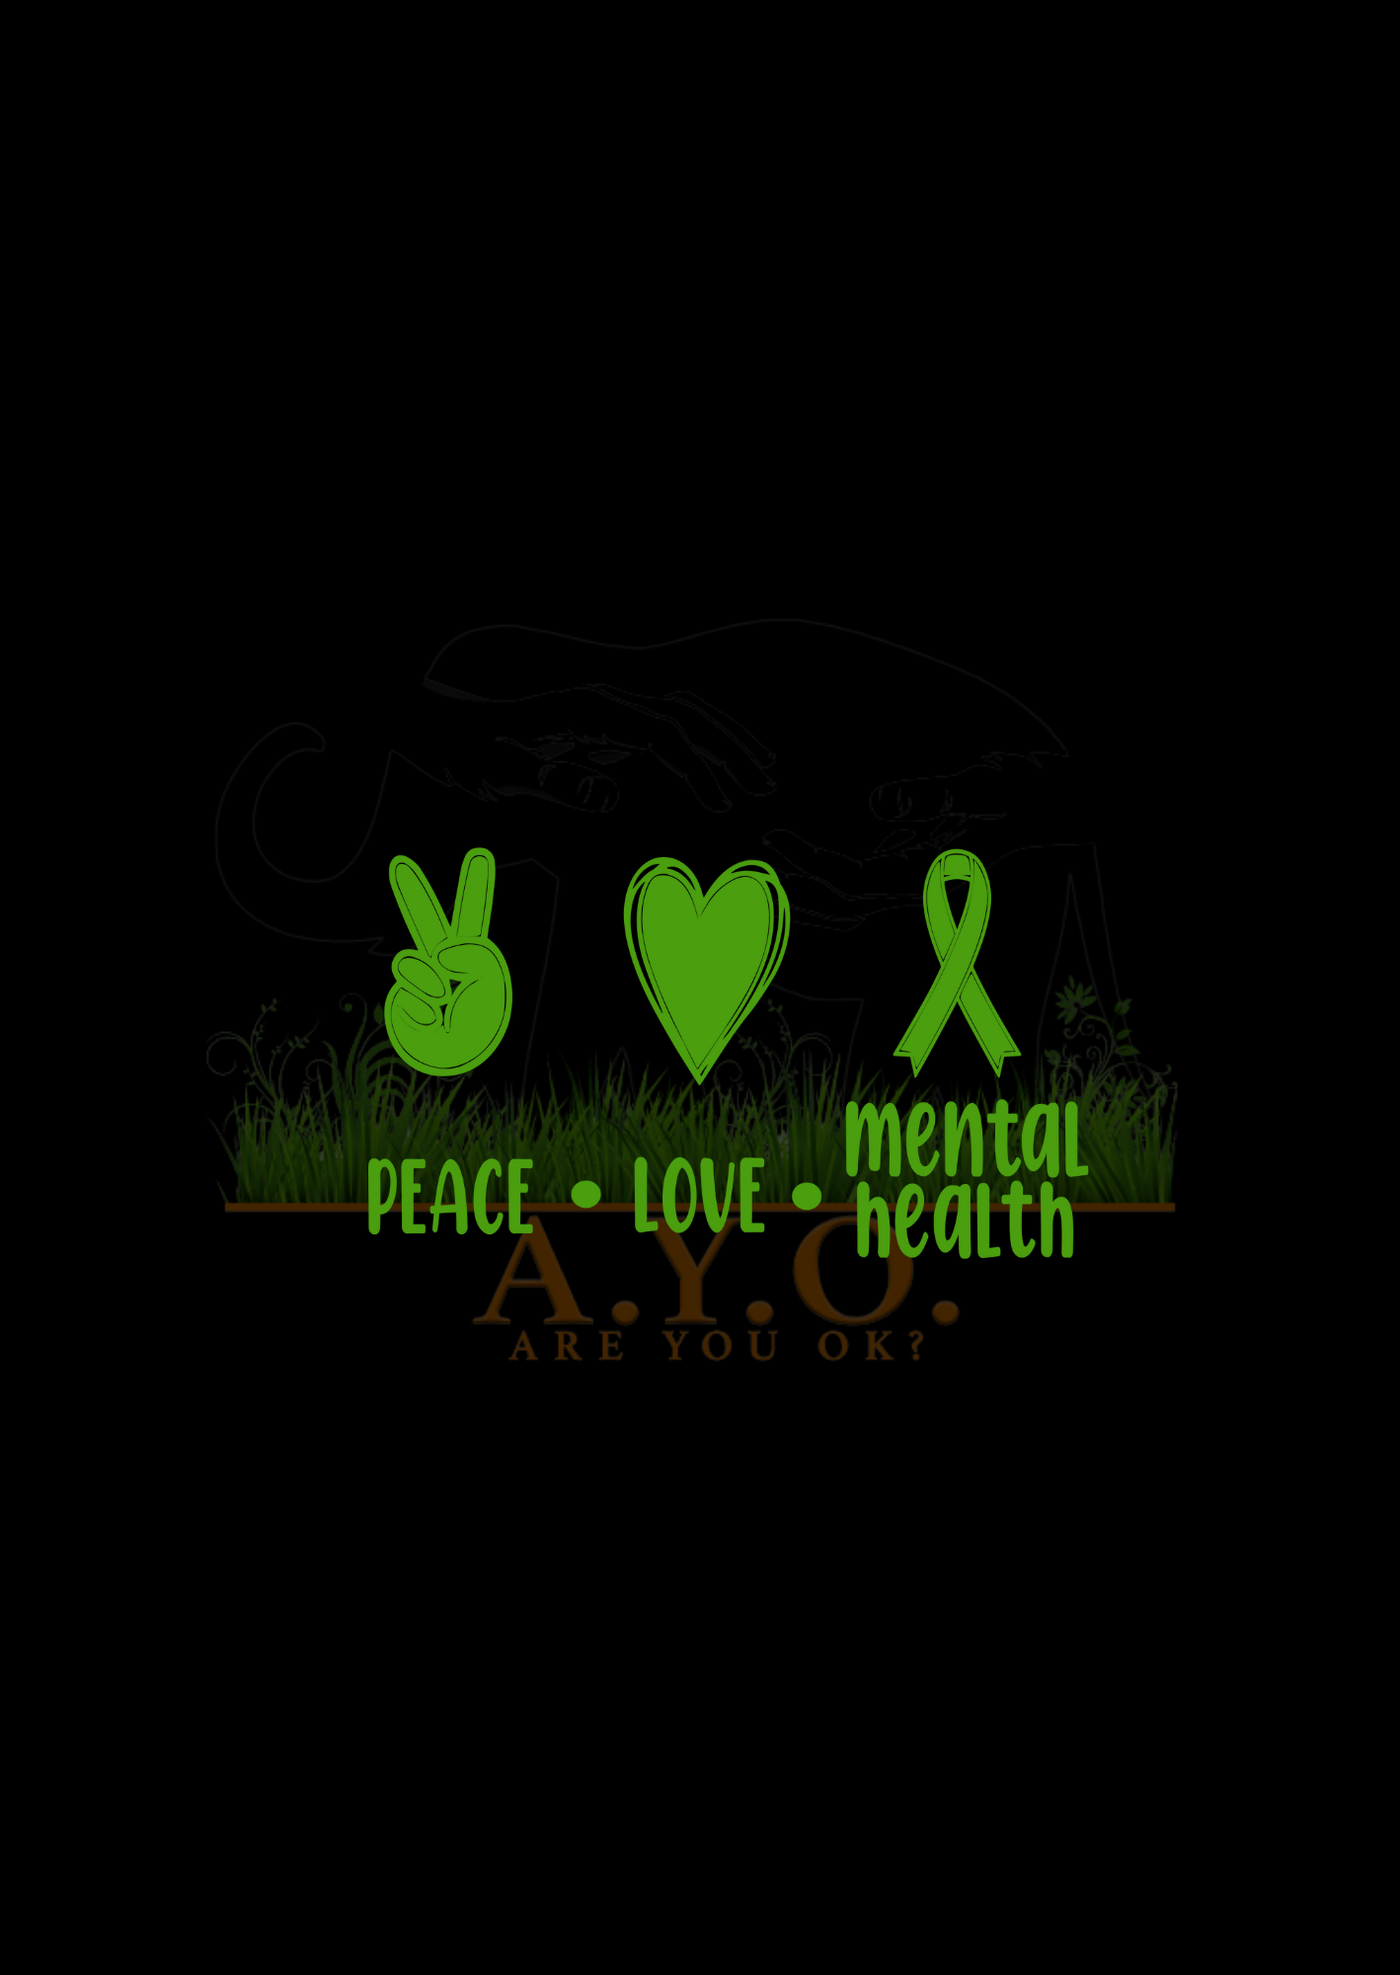 Peace. Love. Mental Health.